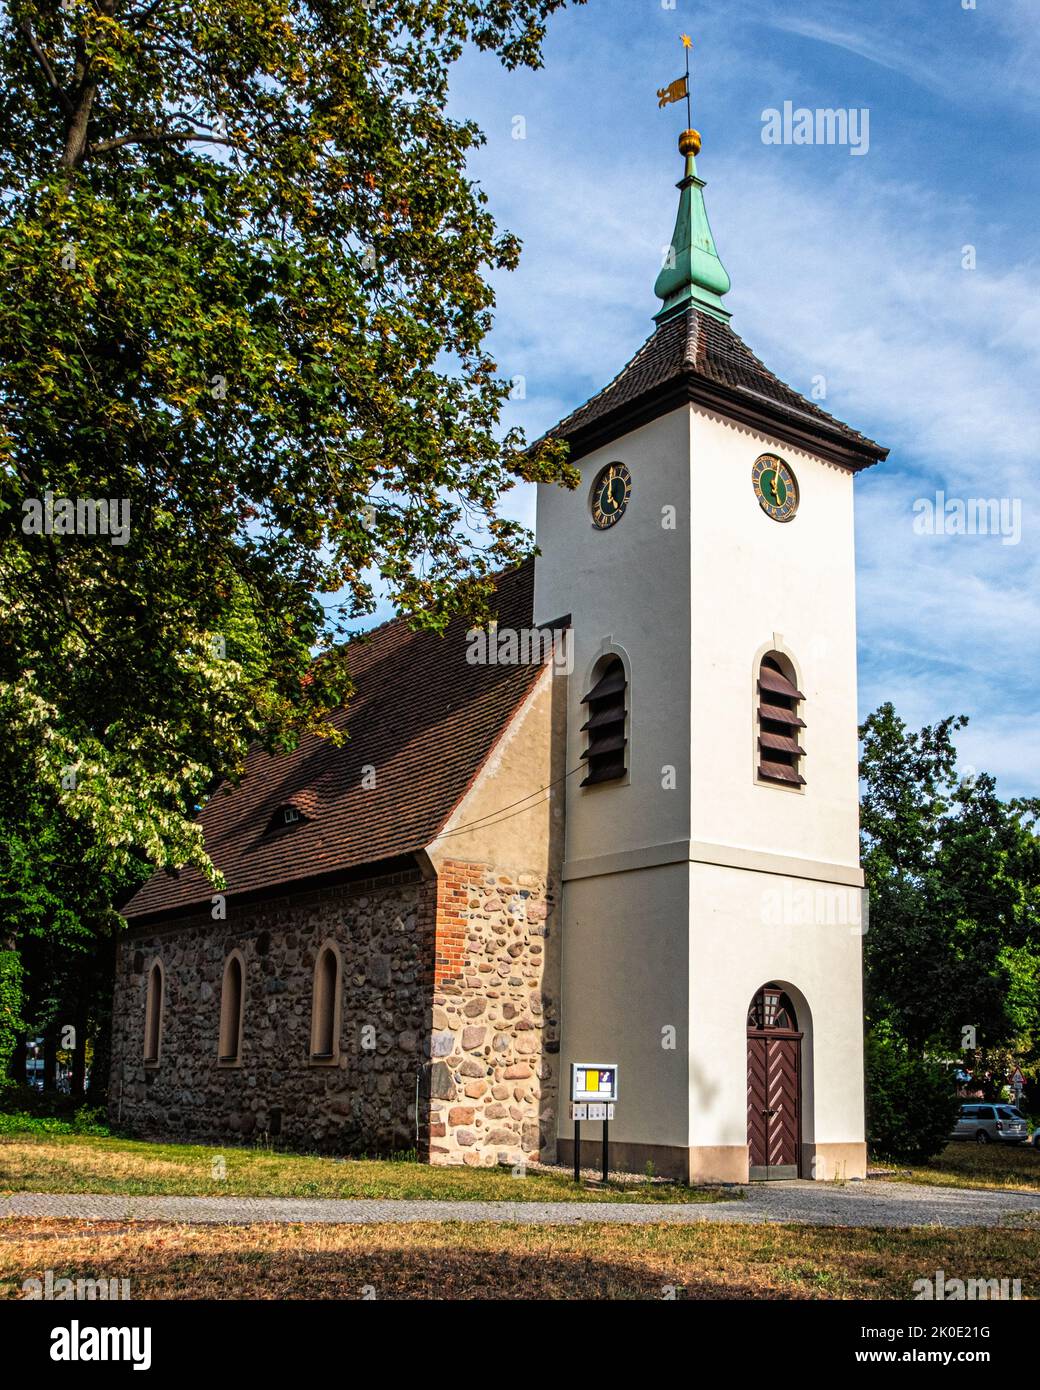 Dorfkirche, Alt Reinickendorf, Berlin. Village church built between1482 & 1489. Mixed masonry church building & tower is a listed monument Stock Photo